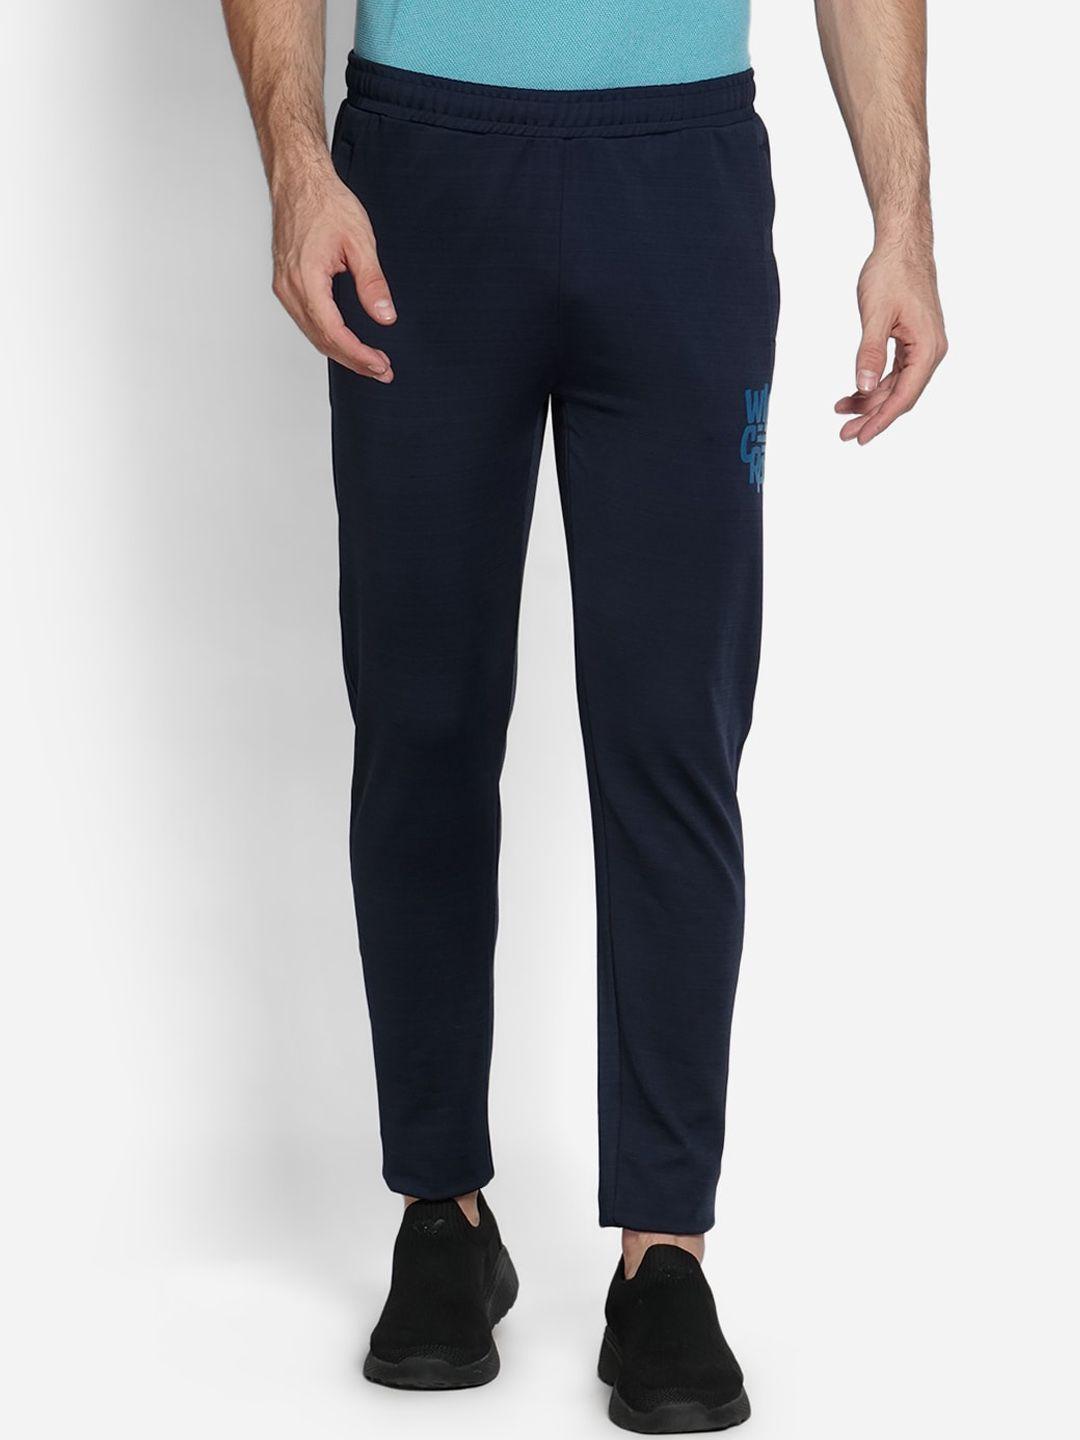 wildcraft-men-navy-blue-solid-cotton-track-pants